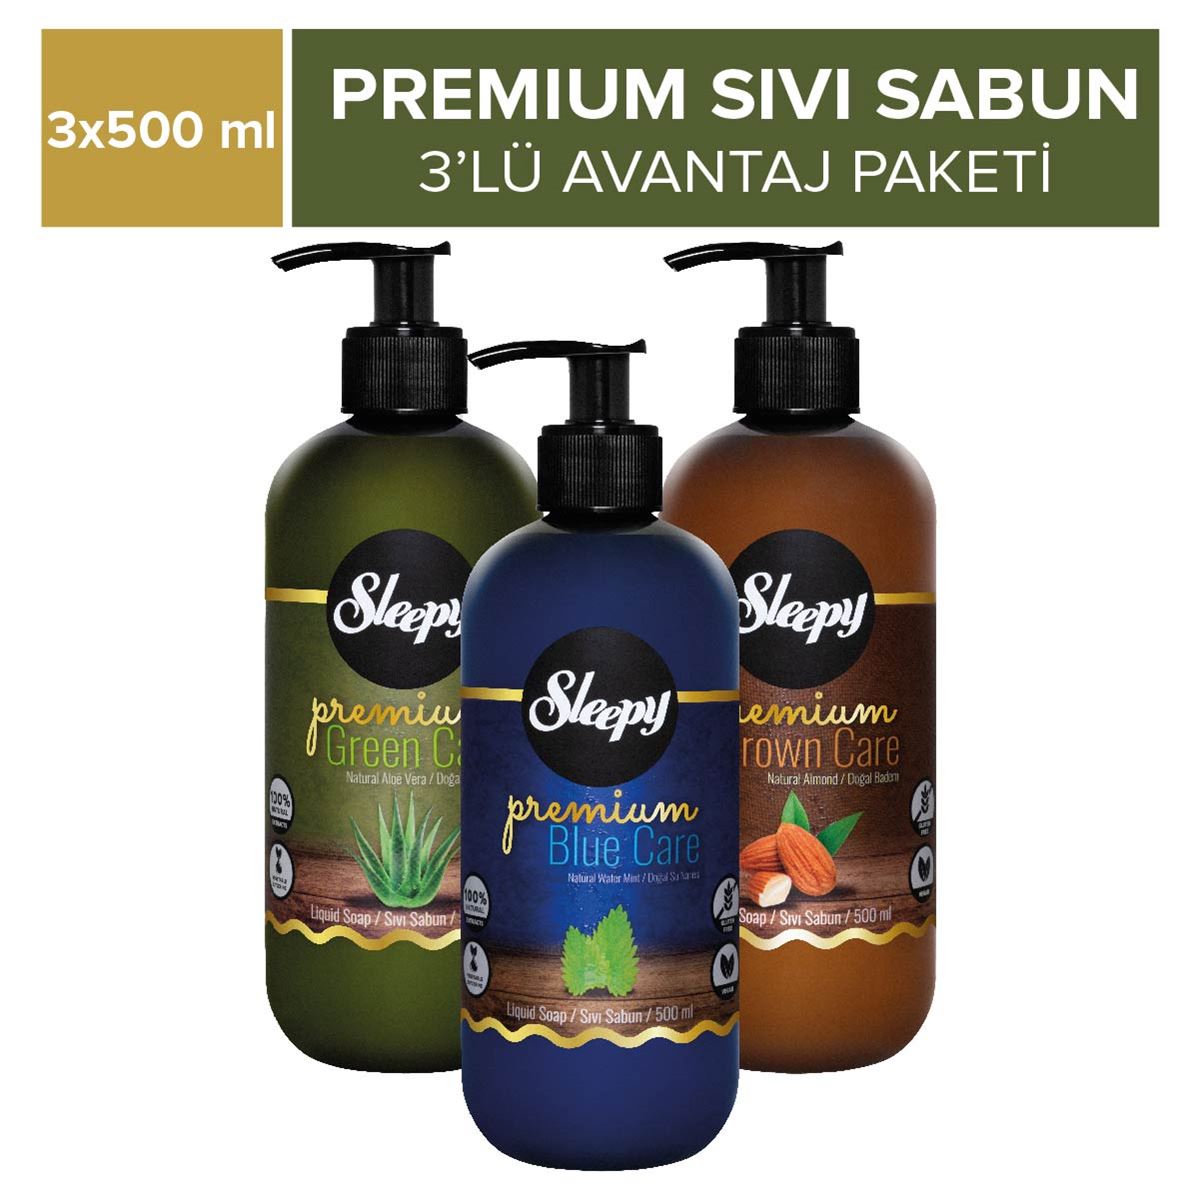 Sleepy Premium Sıvı Sabun 3’lü Avantaj Paketi 3x500 ml